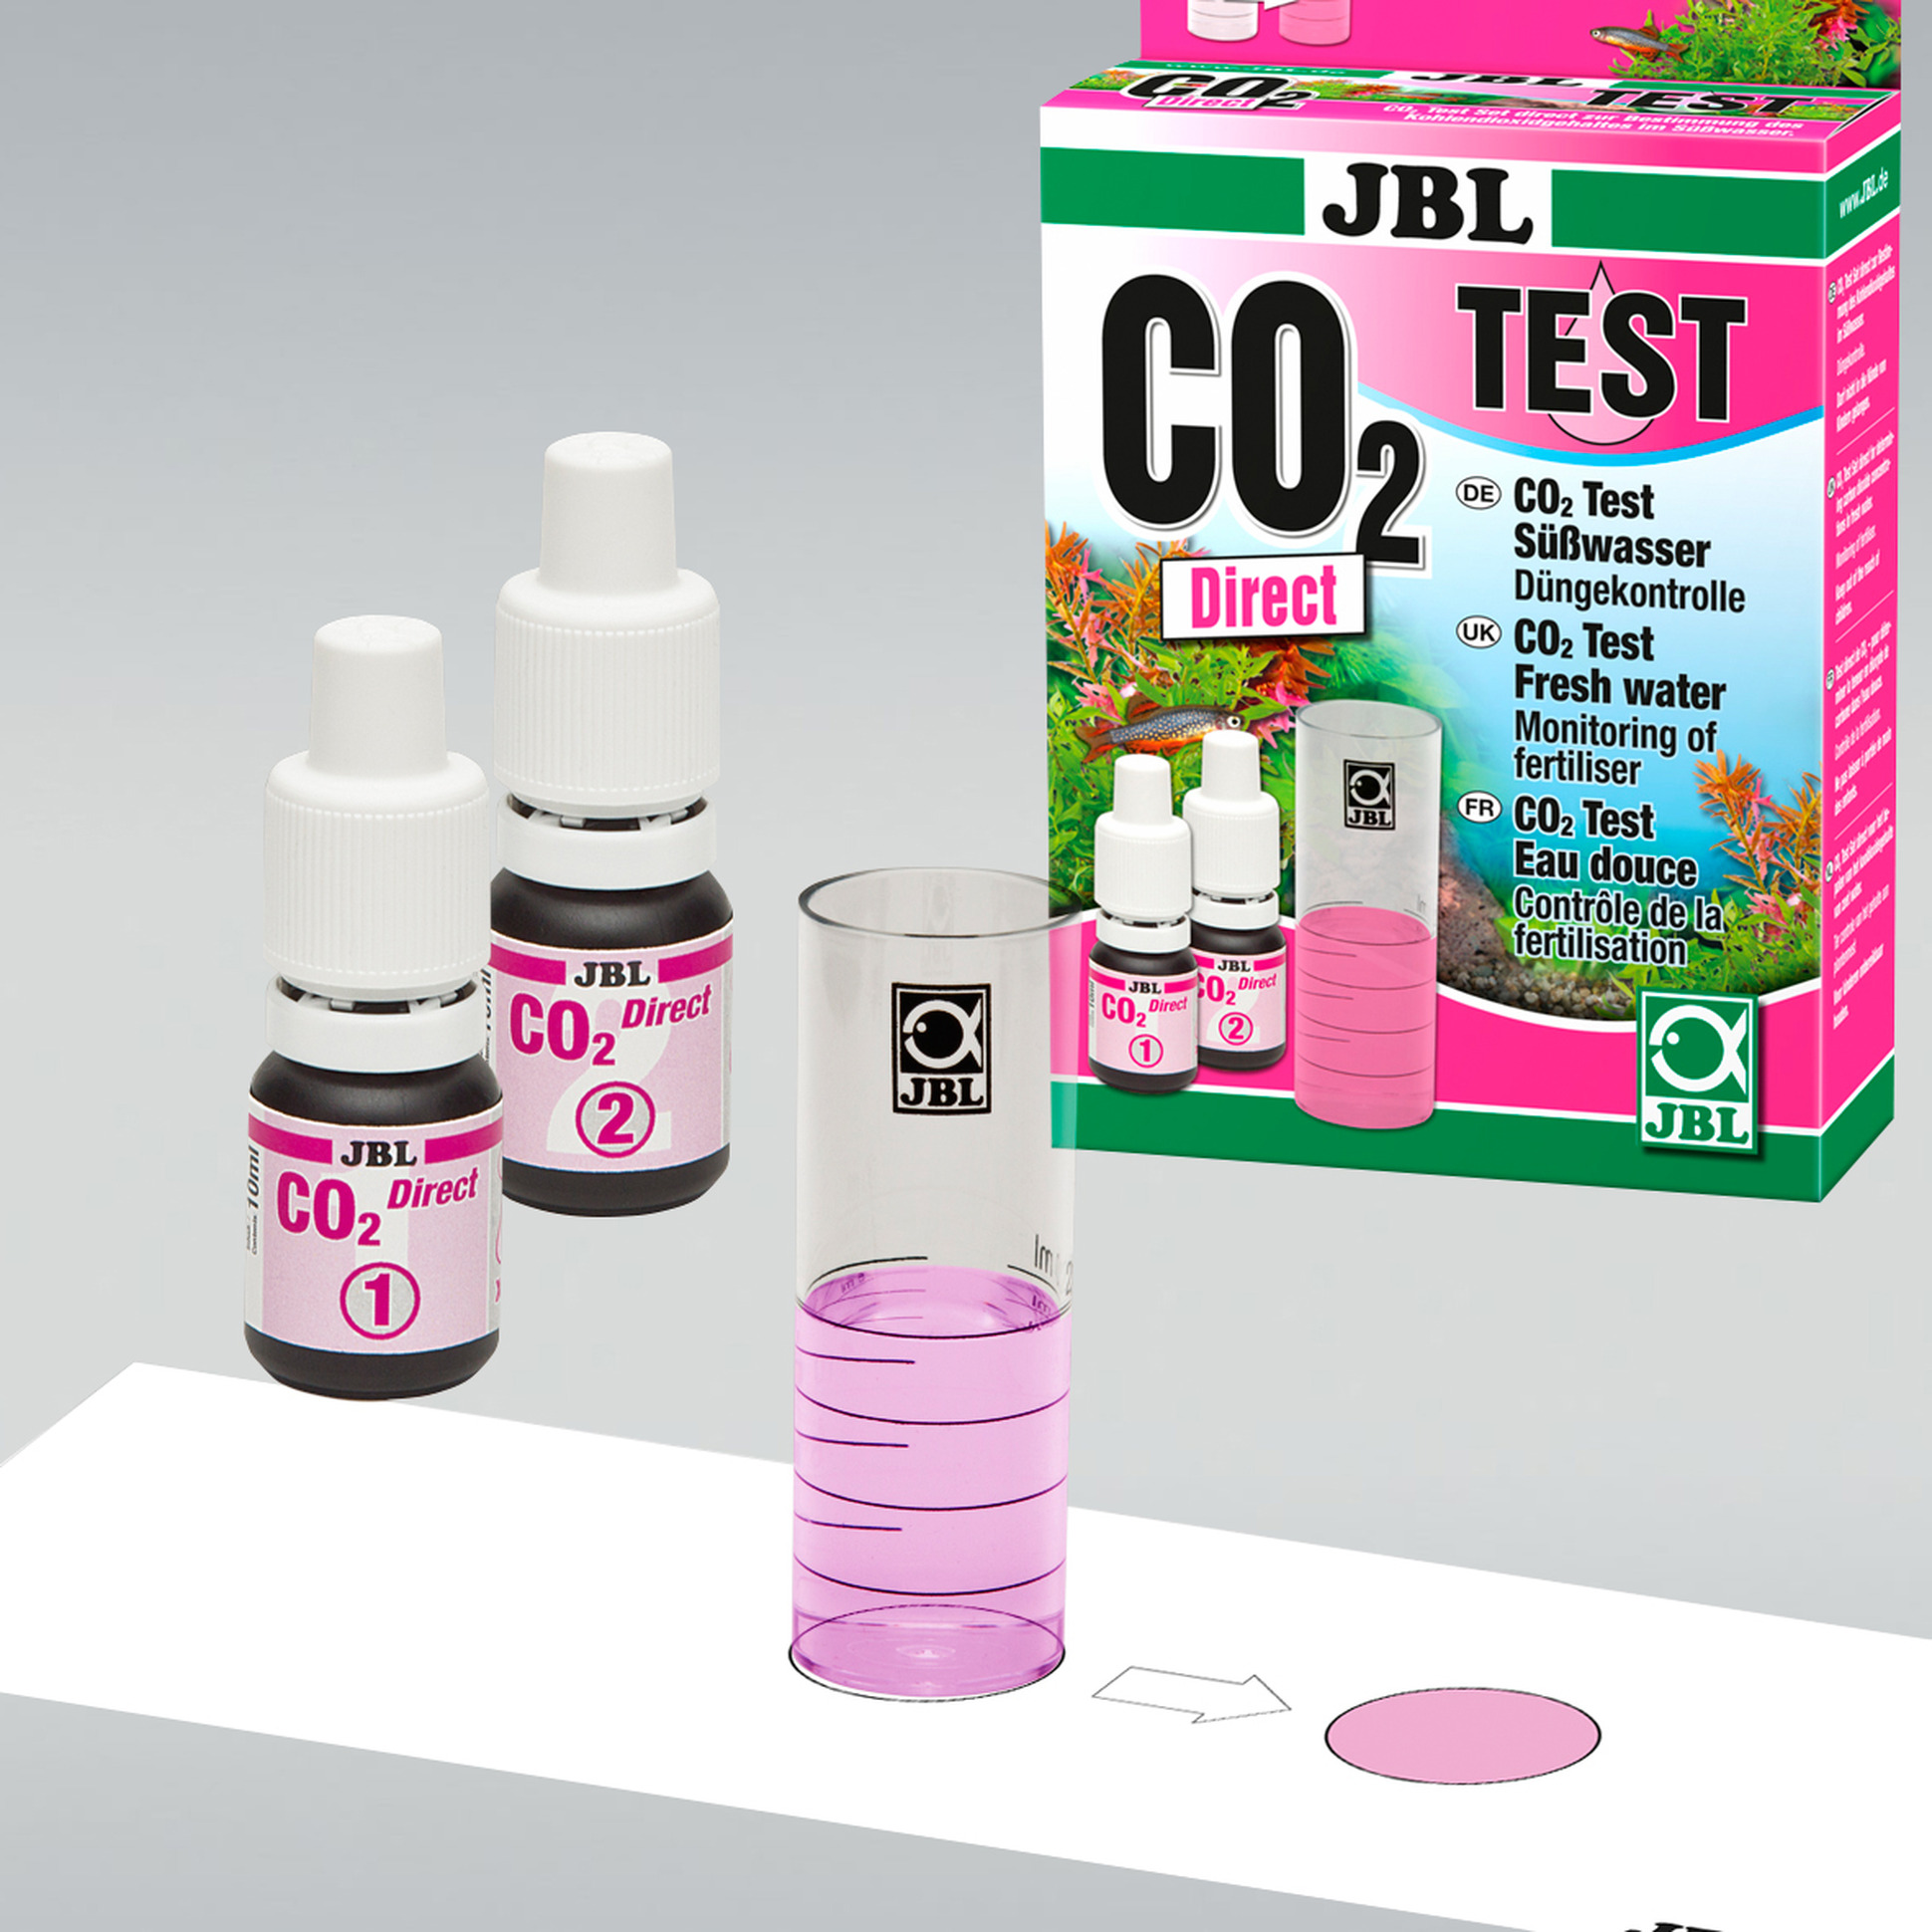 JBL CO2 Direct Test